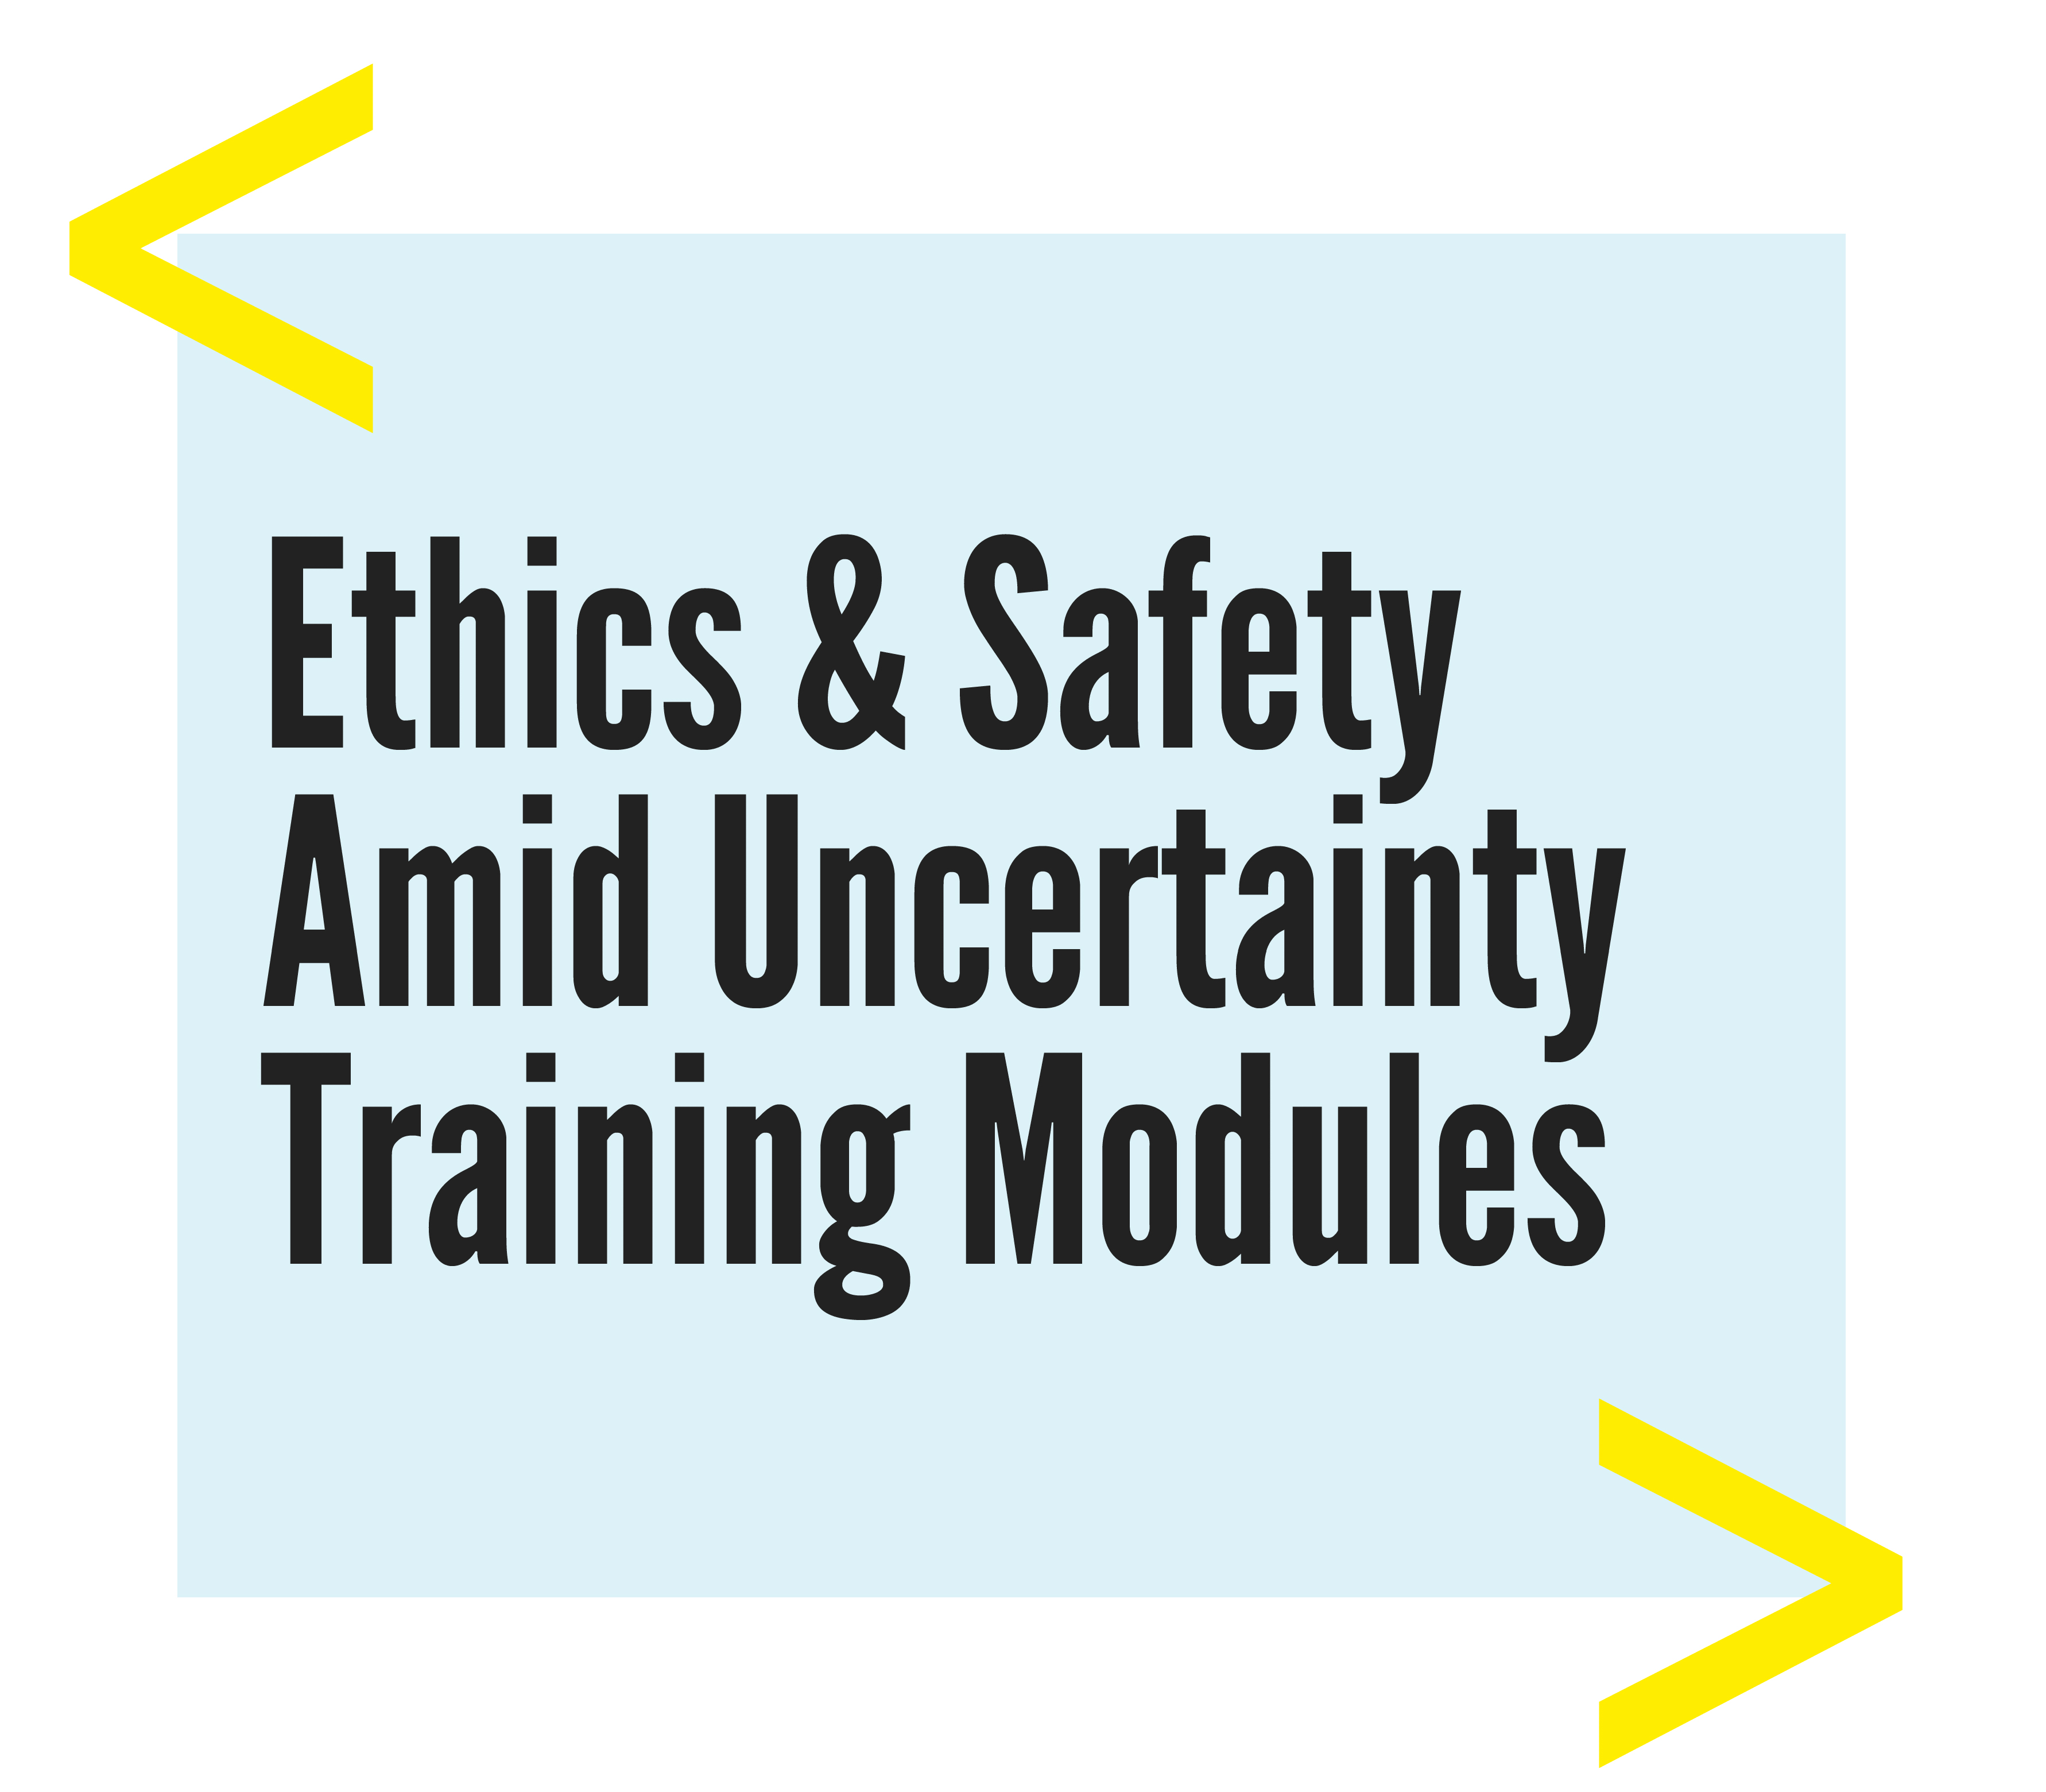 Ethics & Safety Amid Uncertainty Training Modules